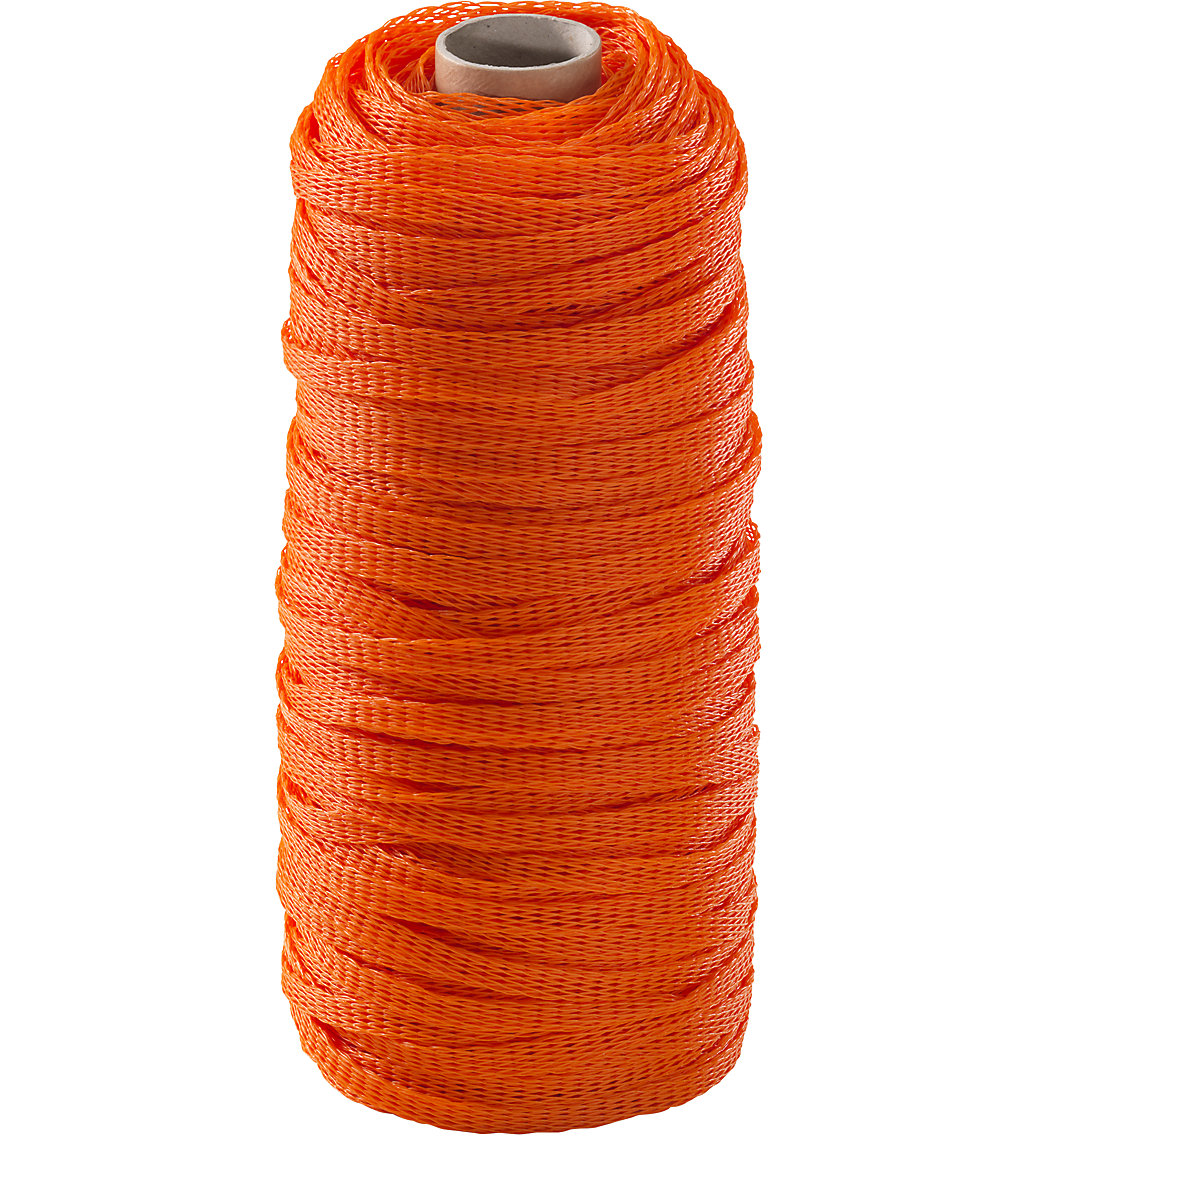 Surface protection net, polyethylene, 1 roll, orange, for Ø 7 – 15 mm